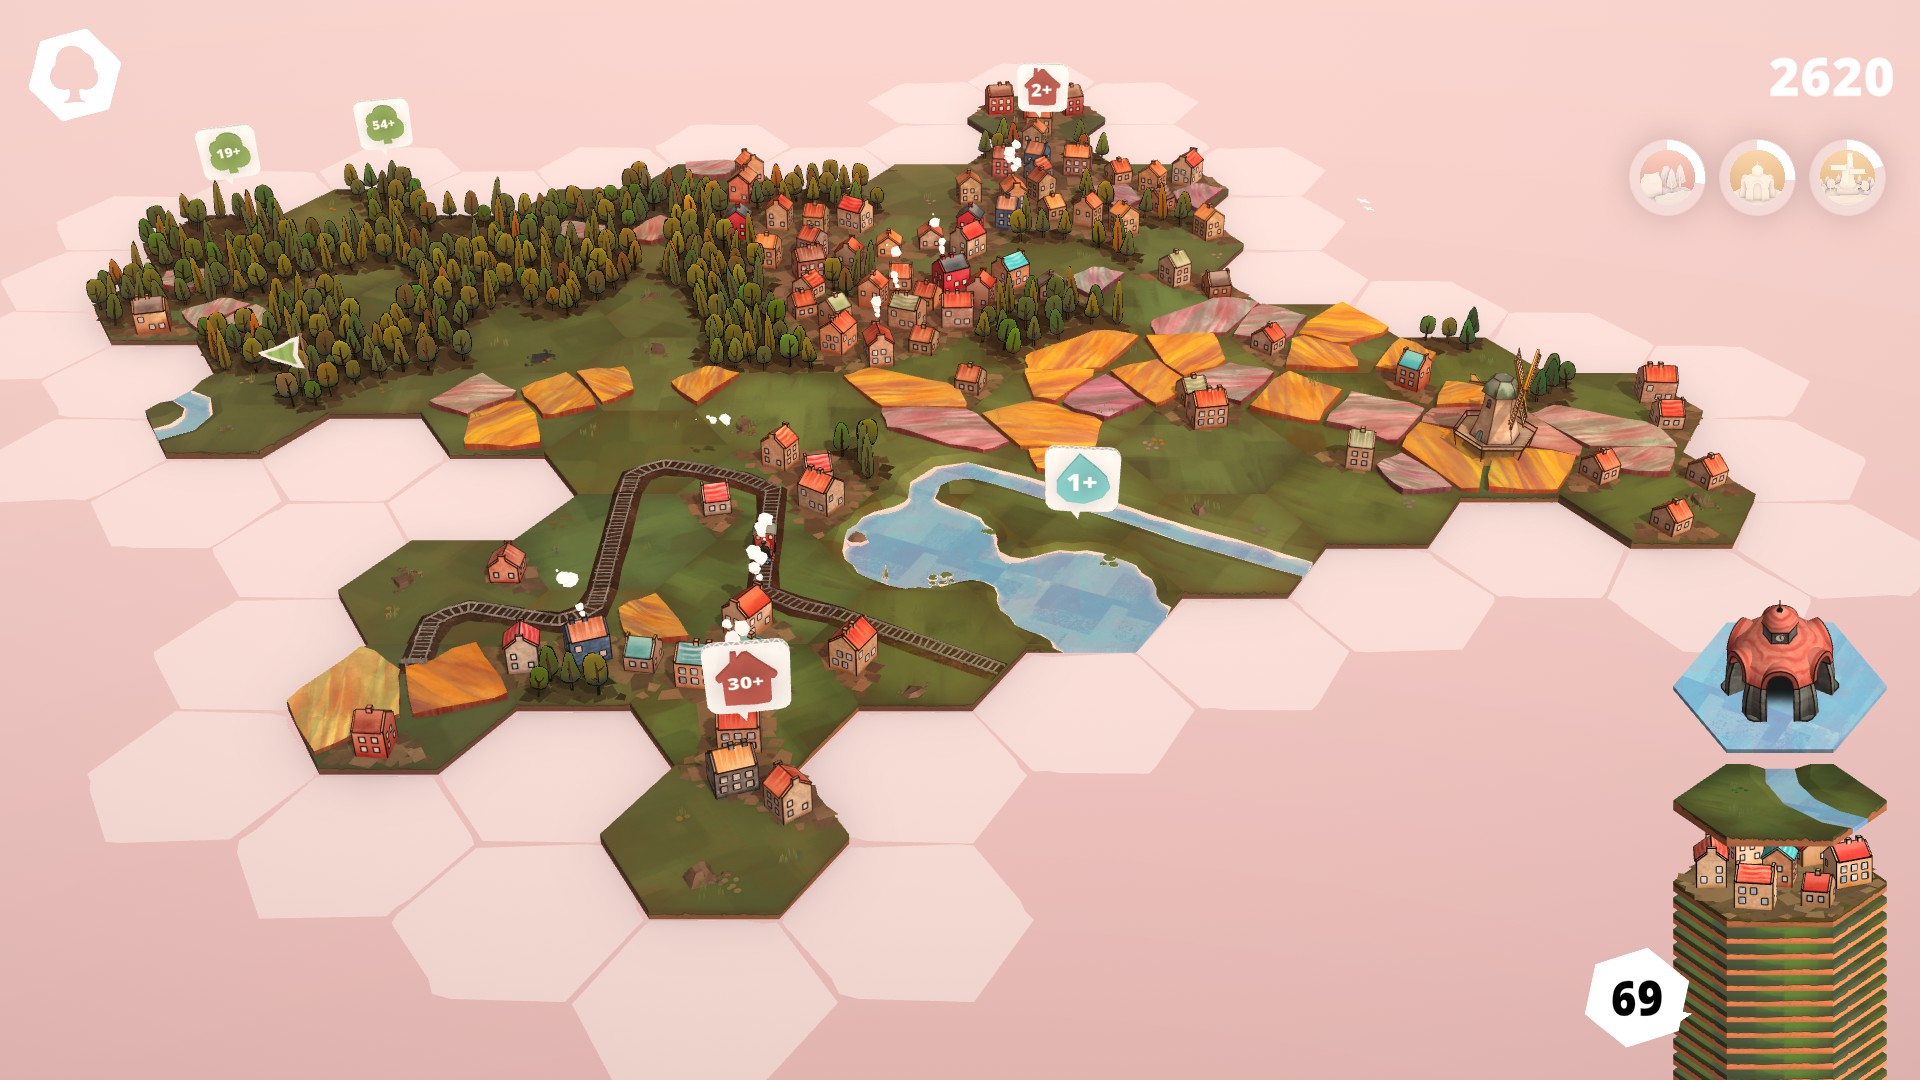 Tile-laying game Dorfromantik gets Creative Mode in Beta Update